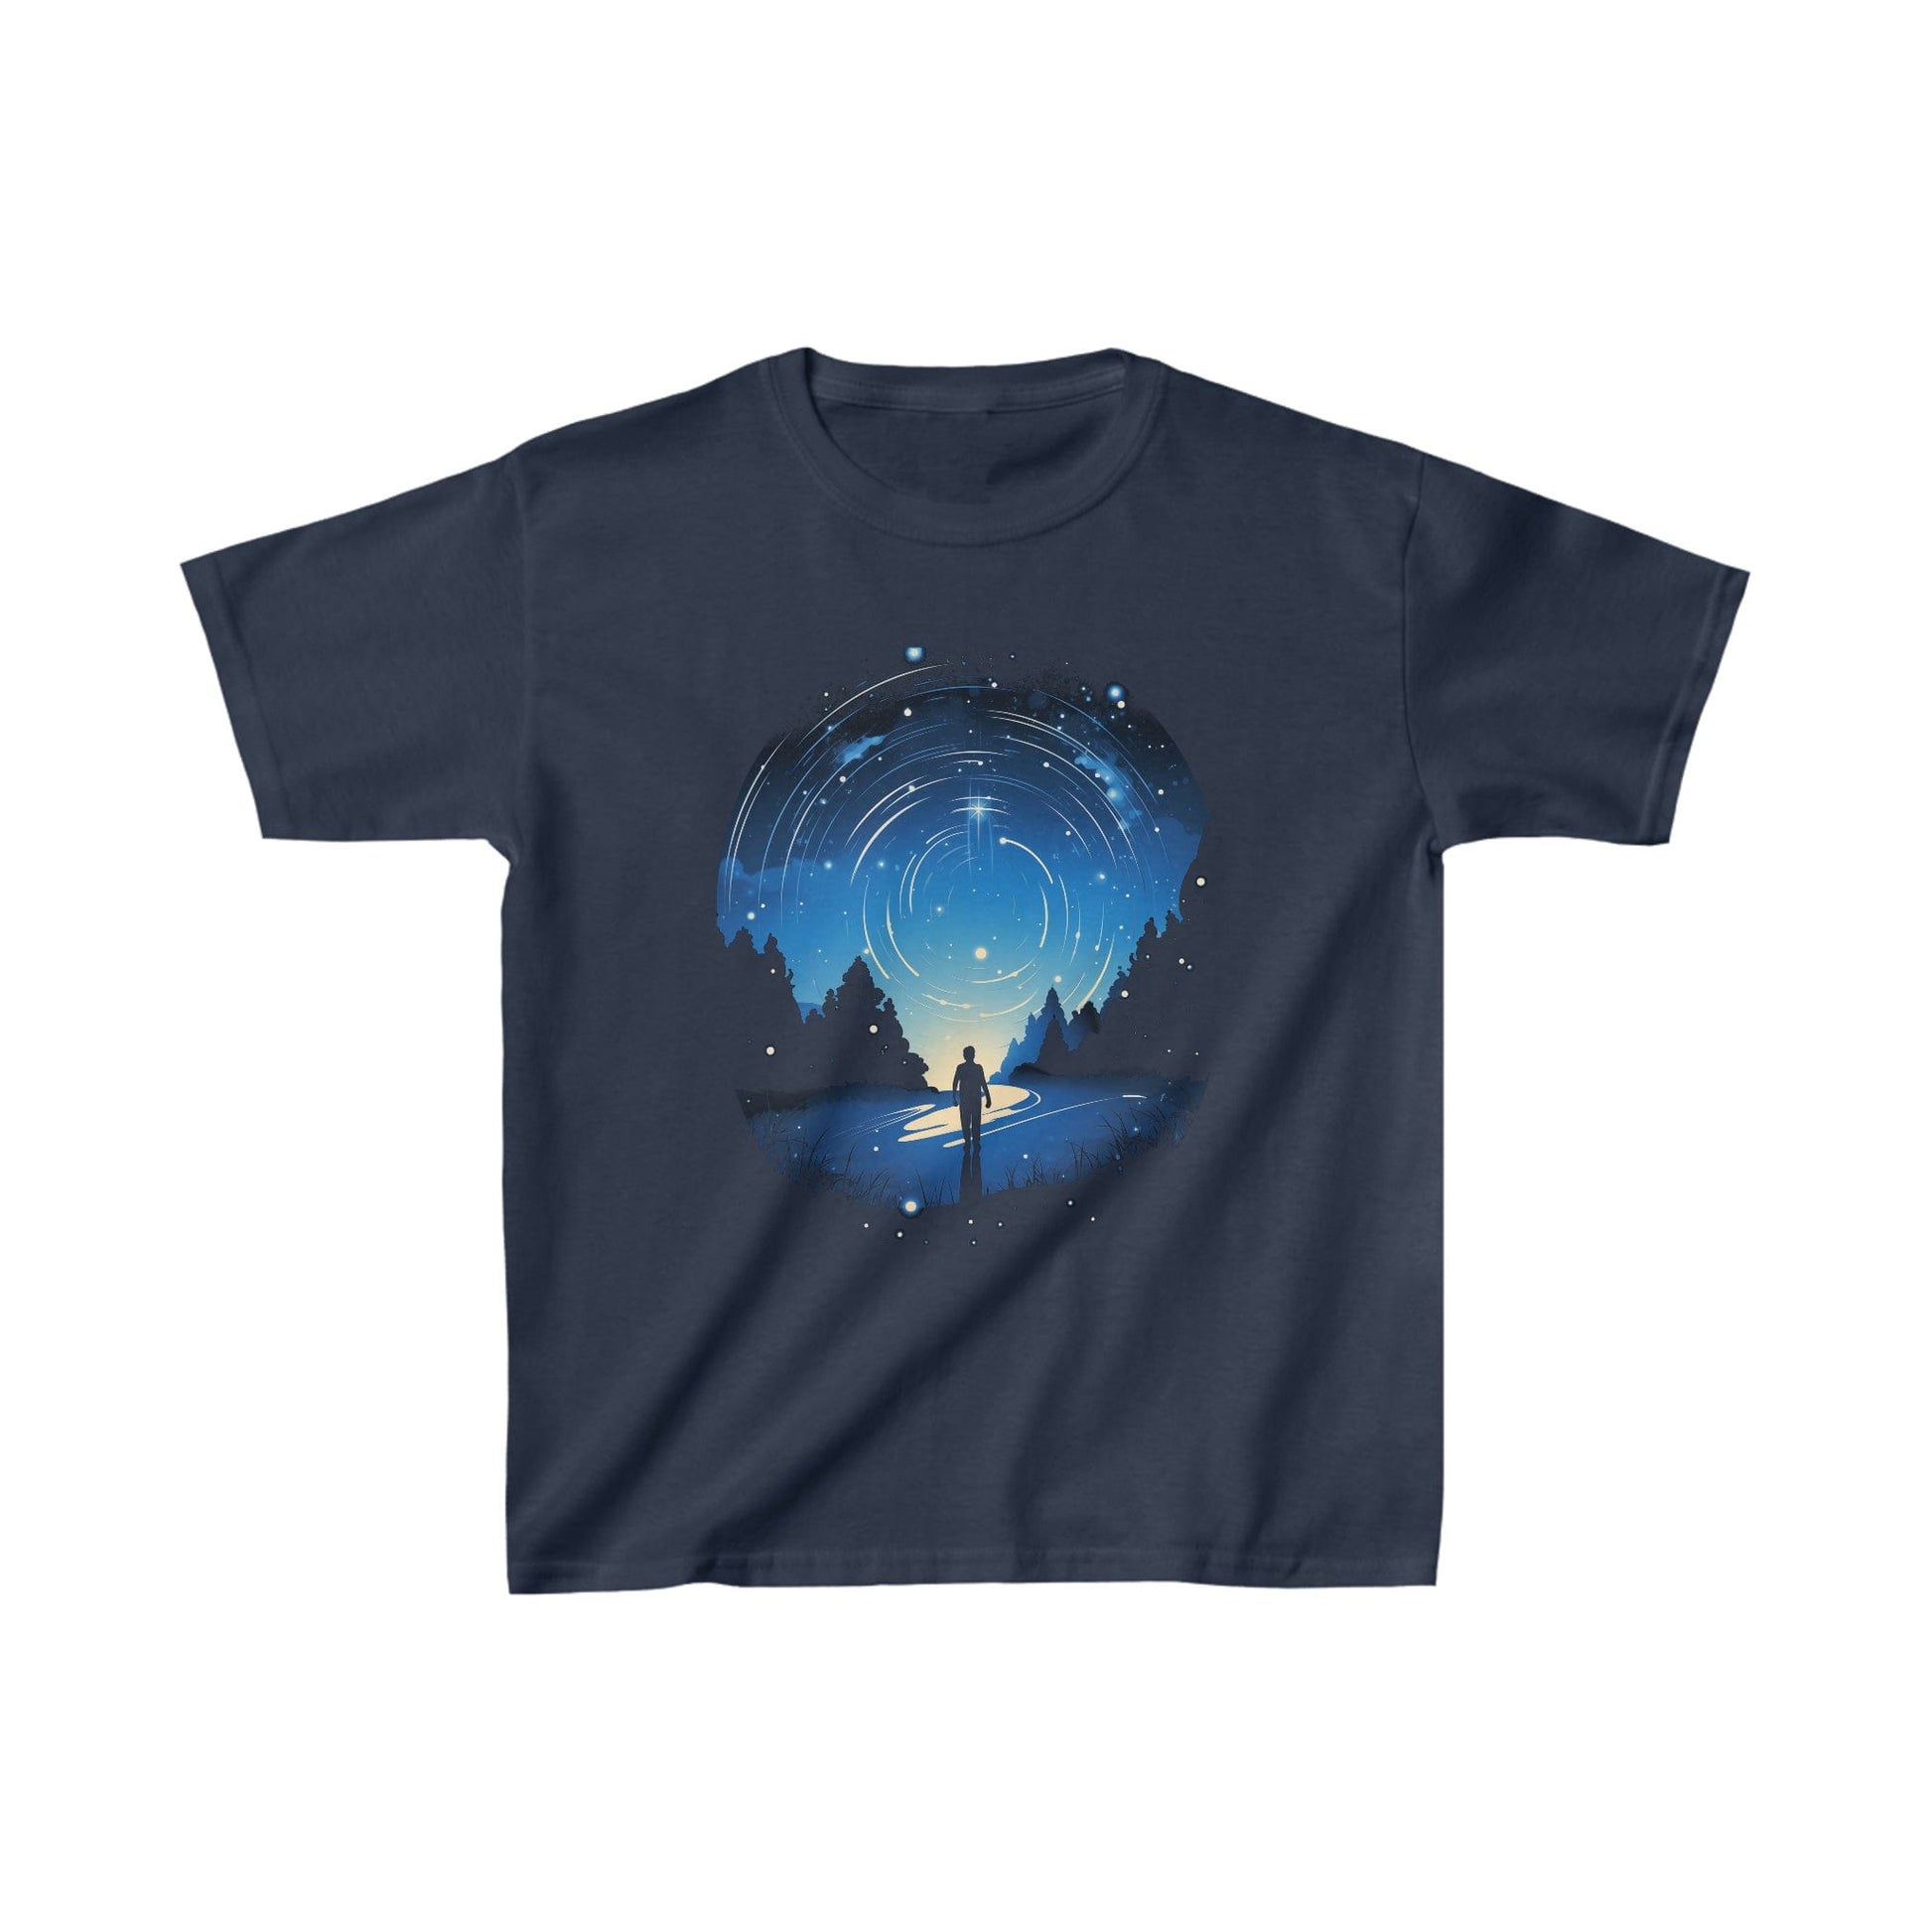 Kids clothes XS / Navy Youth Cosmic Swirl: Explorer Gazing at the Night Sky T-Shirt